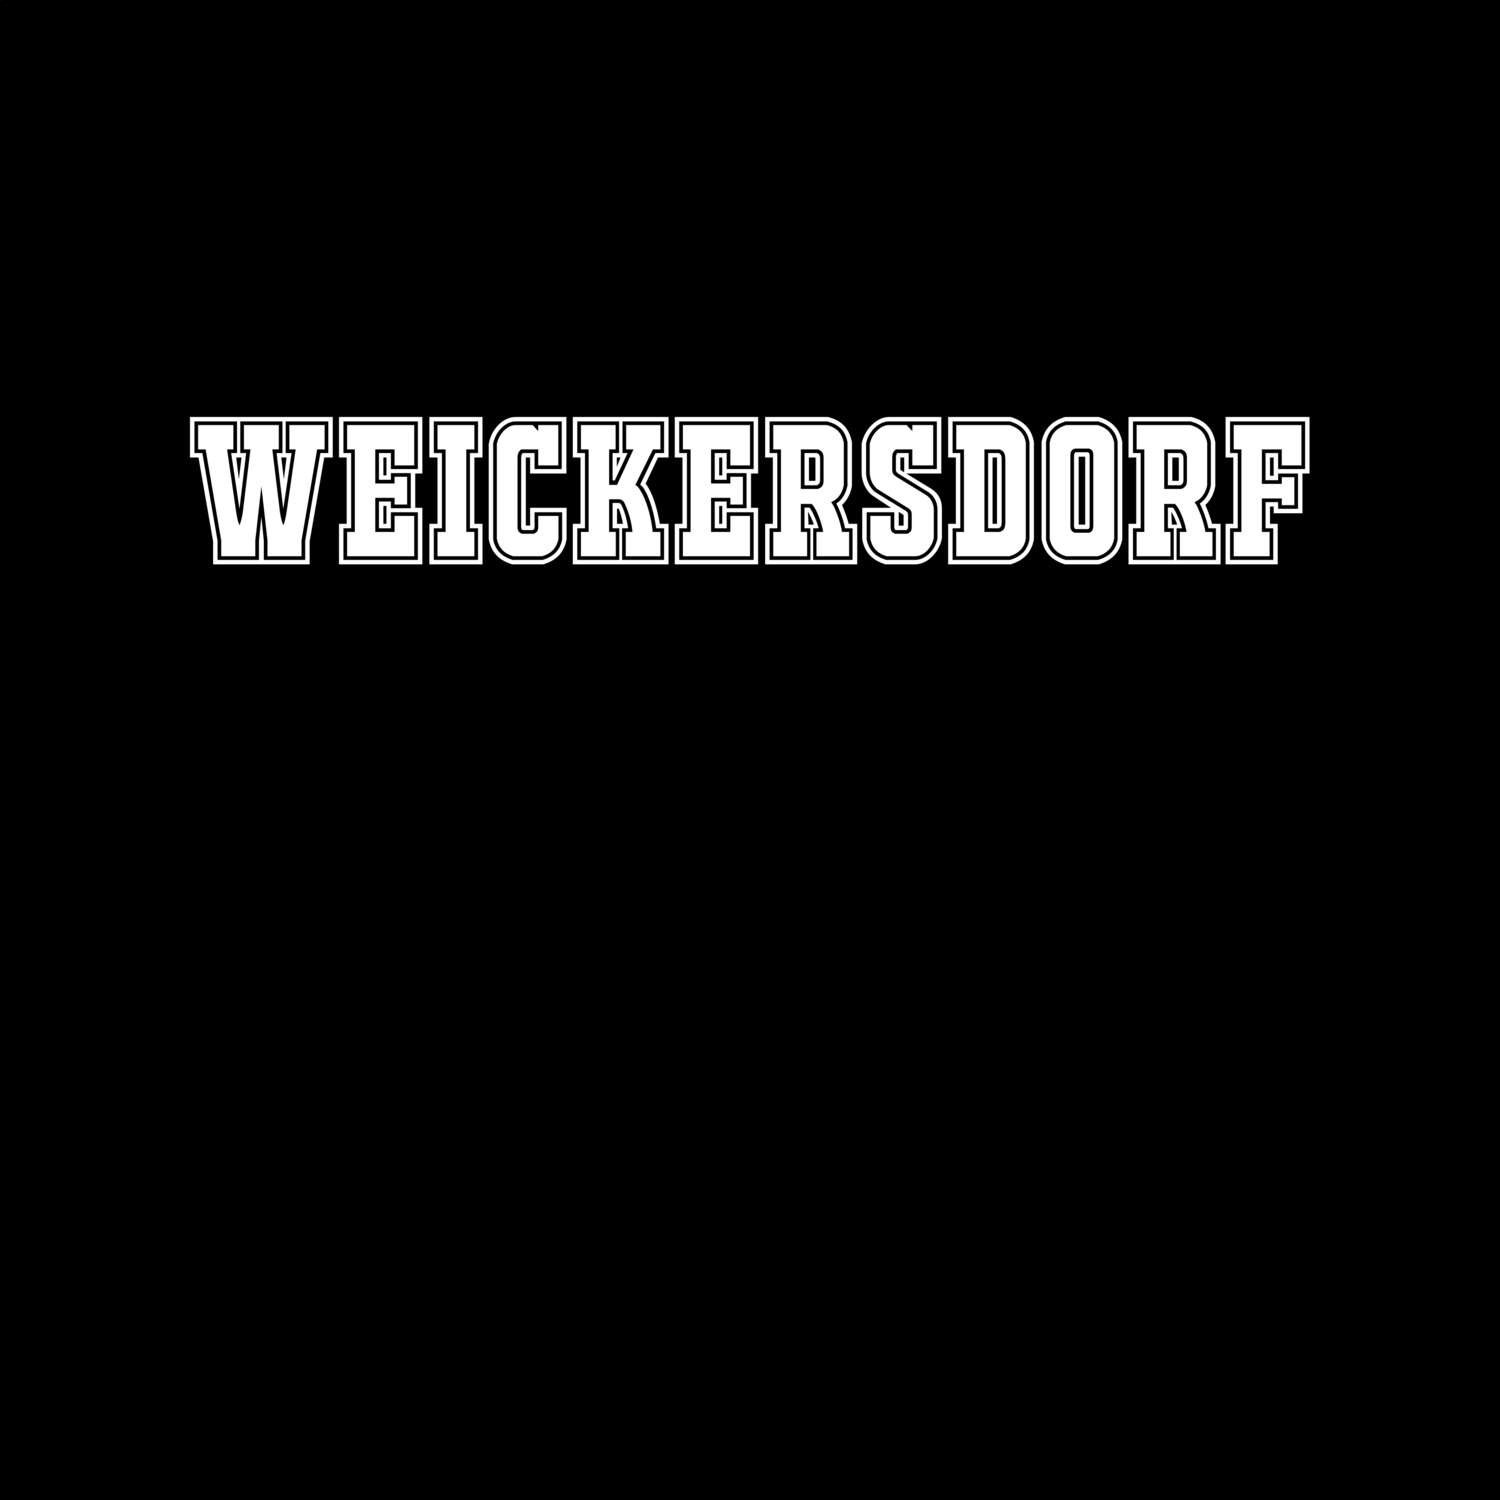 Weickersdorf T-Shirt »Classic«